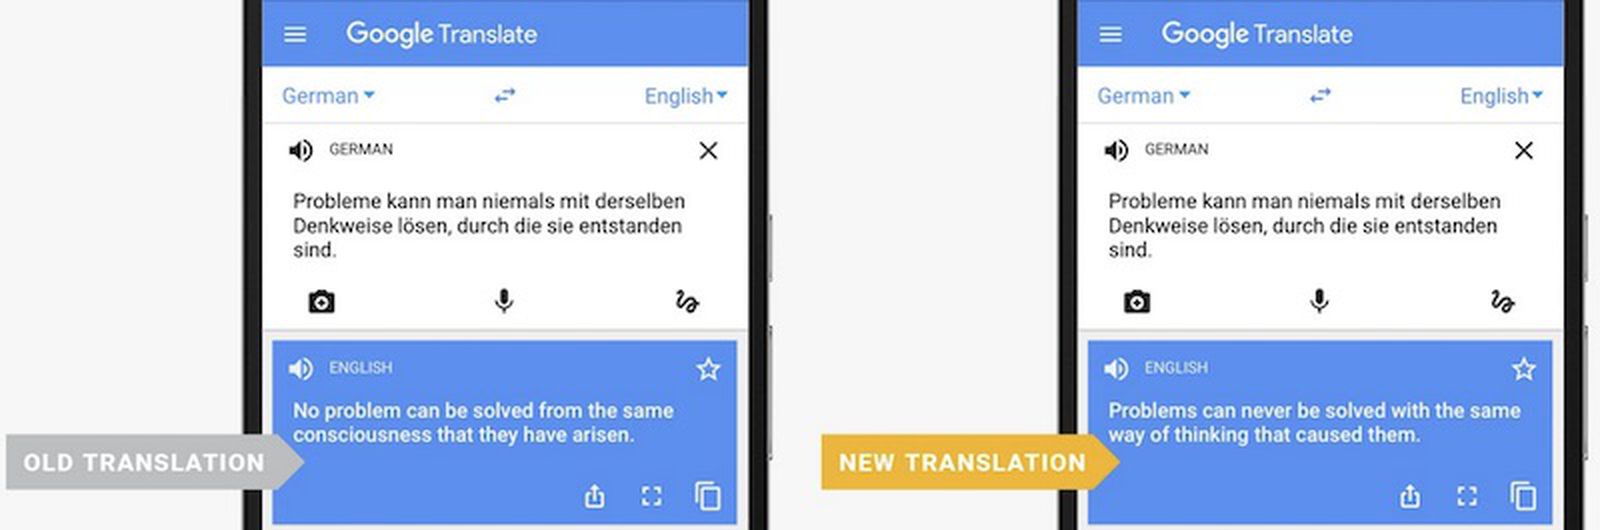 Google Translate Update Bringing EasiertoRead Translations to Web and